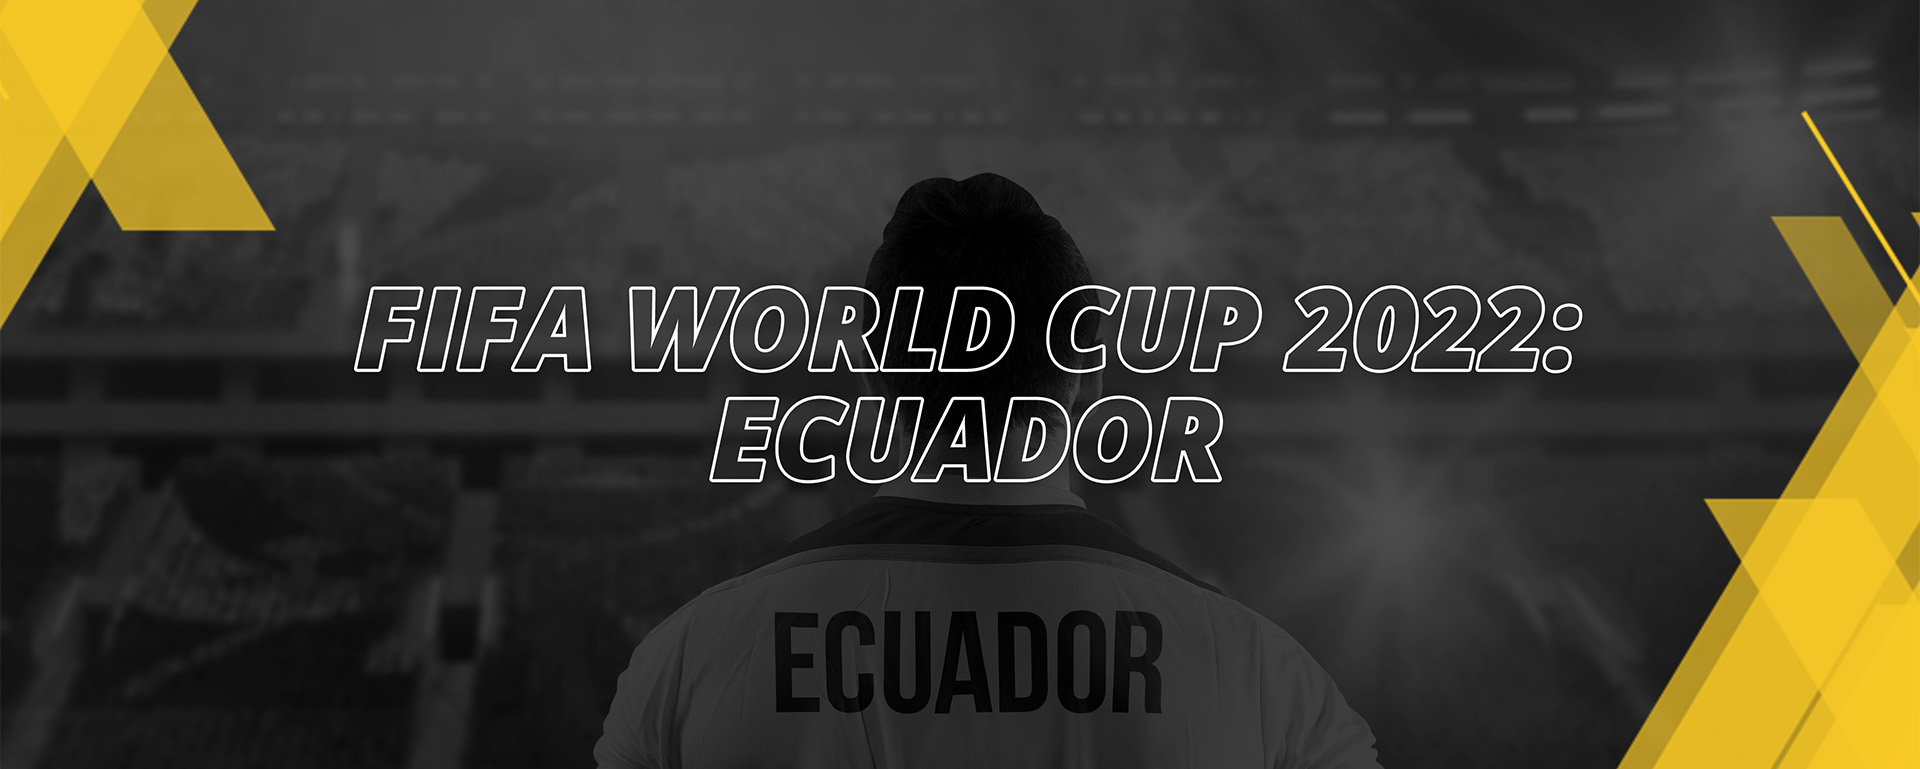 ECUADOR – FIFA WORLD CUP QATAR 2022 – FAN’S COMPENDIUM